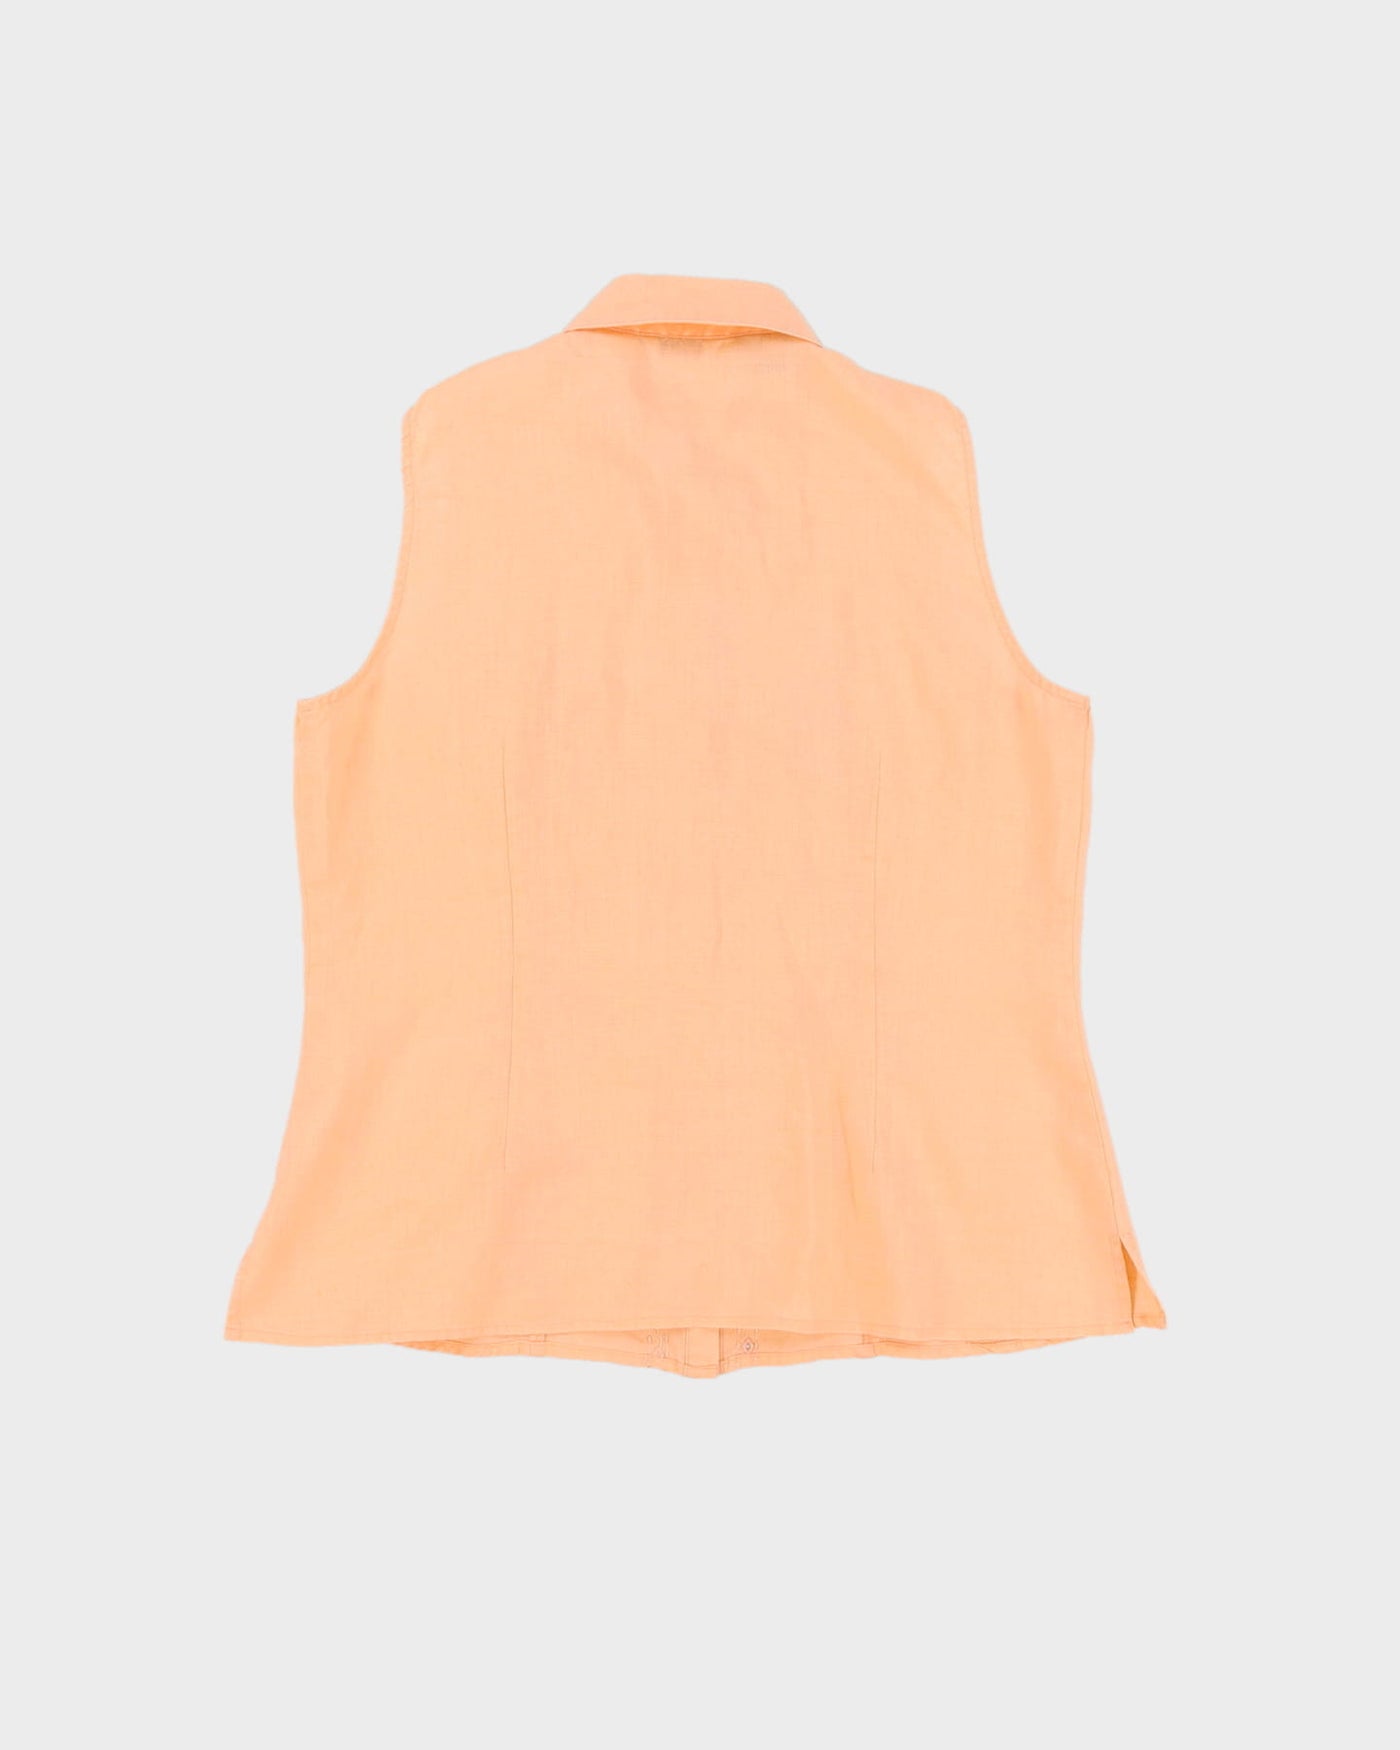 Orange Embroidered Linen Top - M